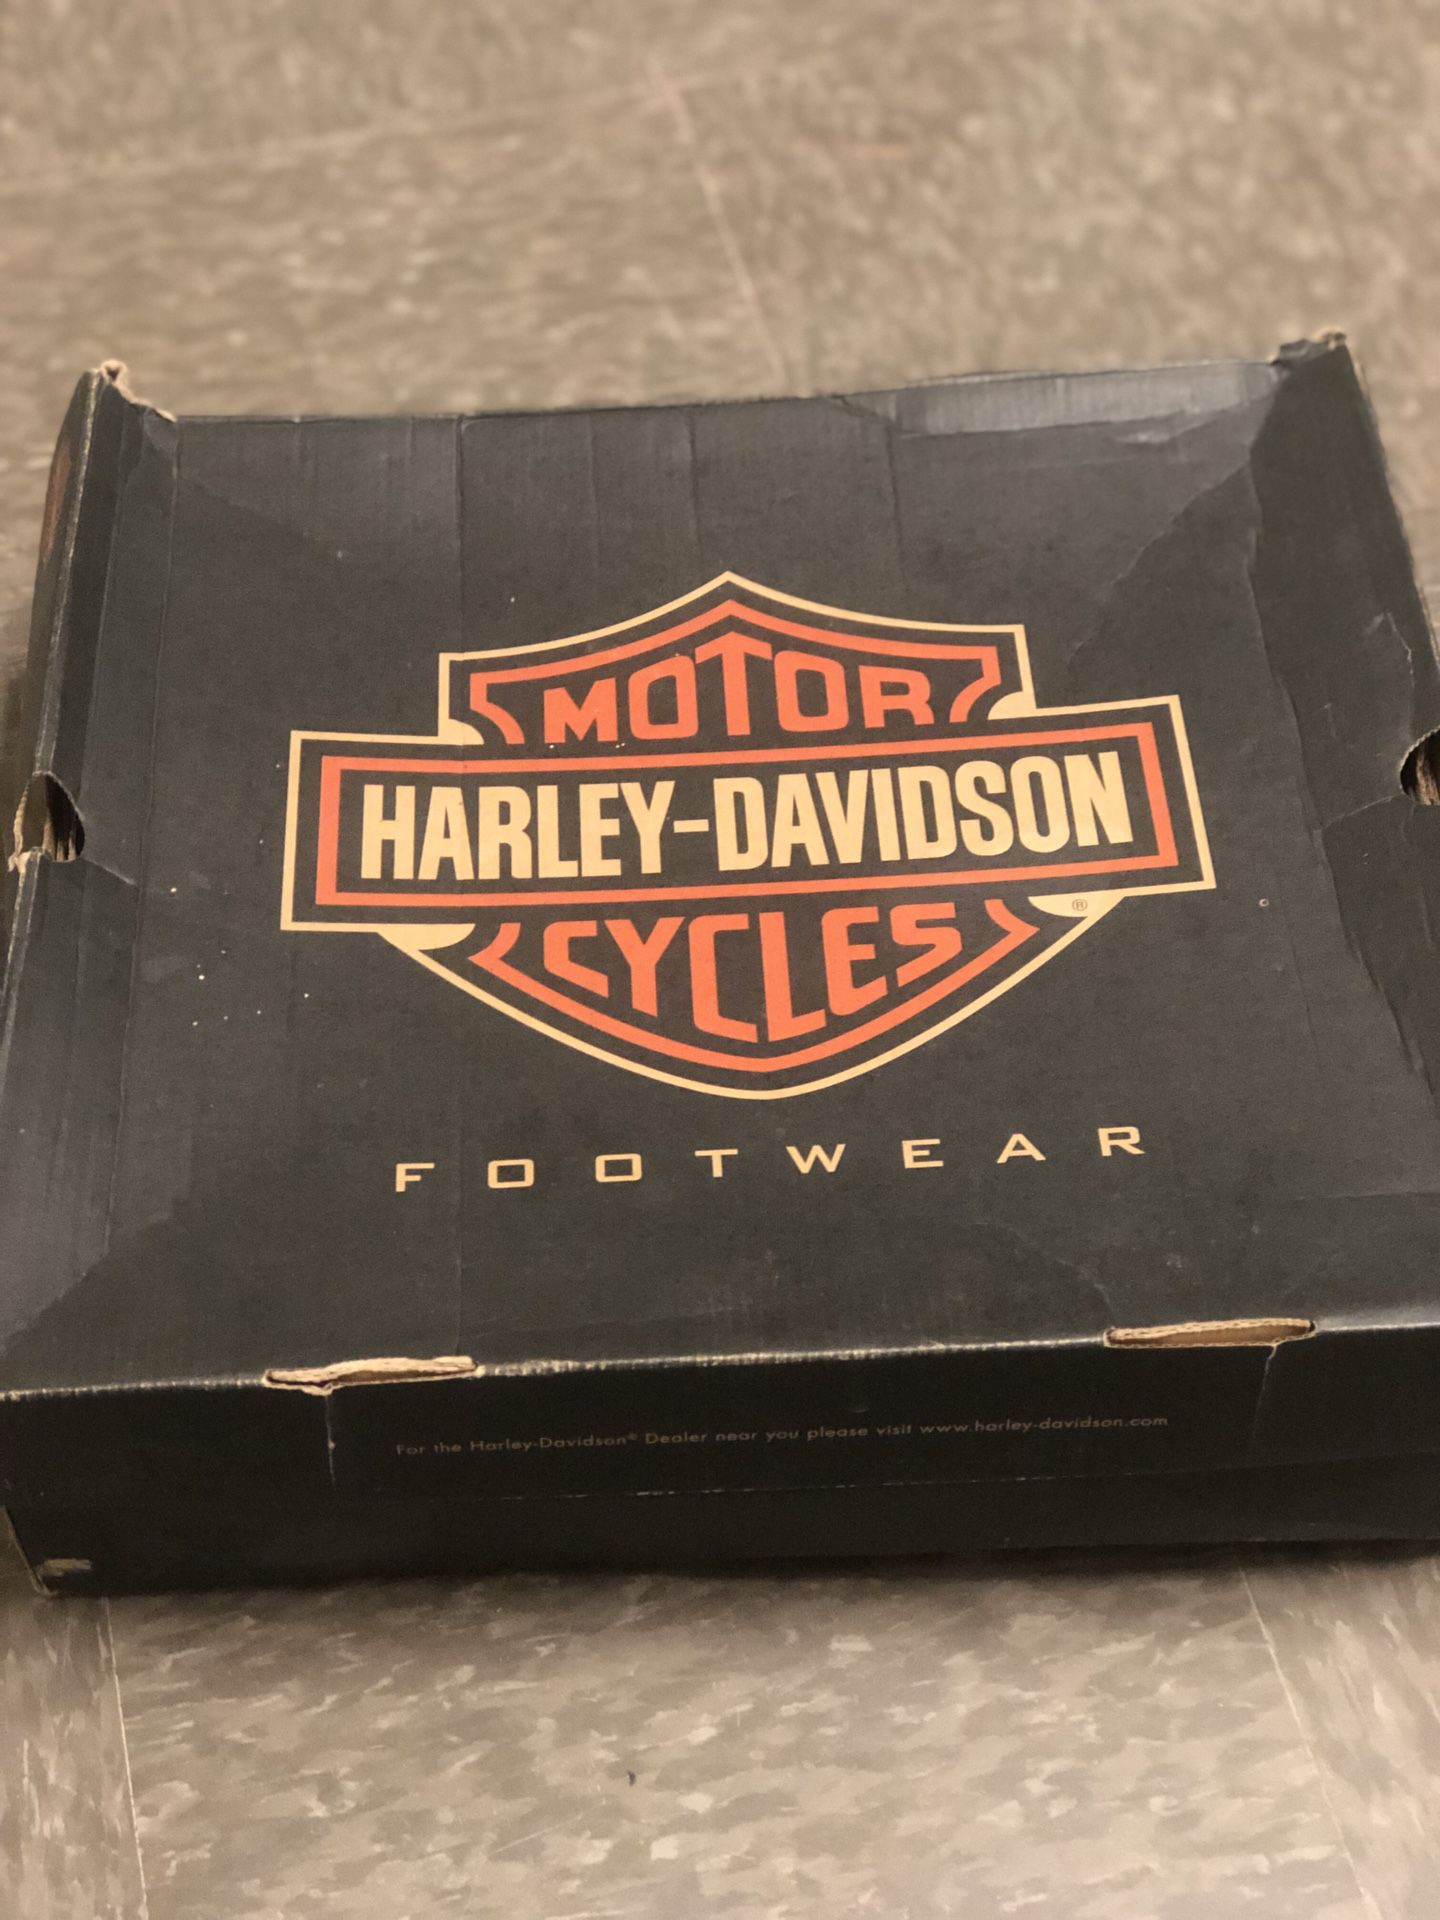 New Harley Davidson Boots!!!!